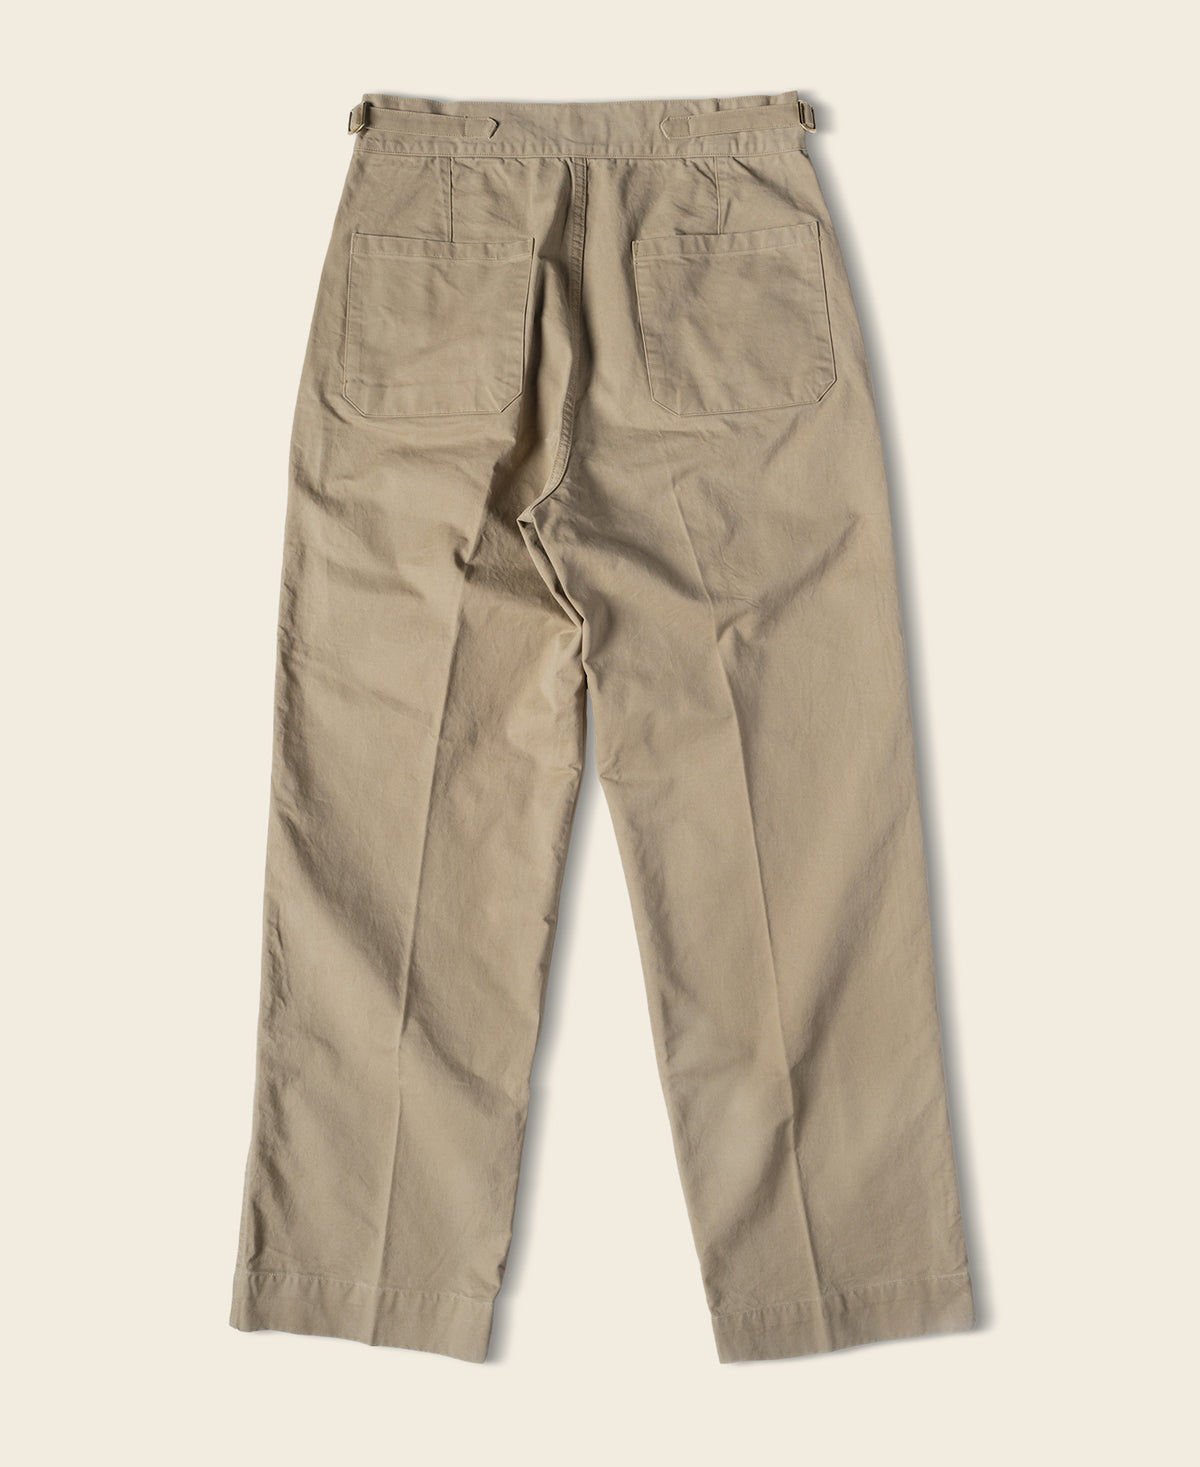 1960s AUS Army Combat Pants - Khaki